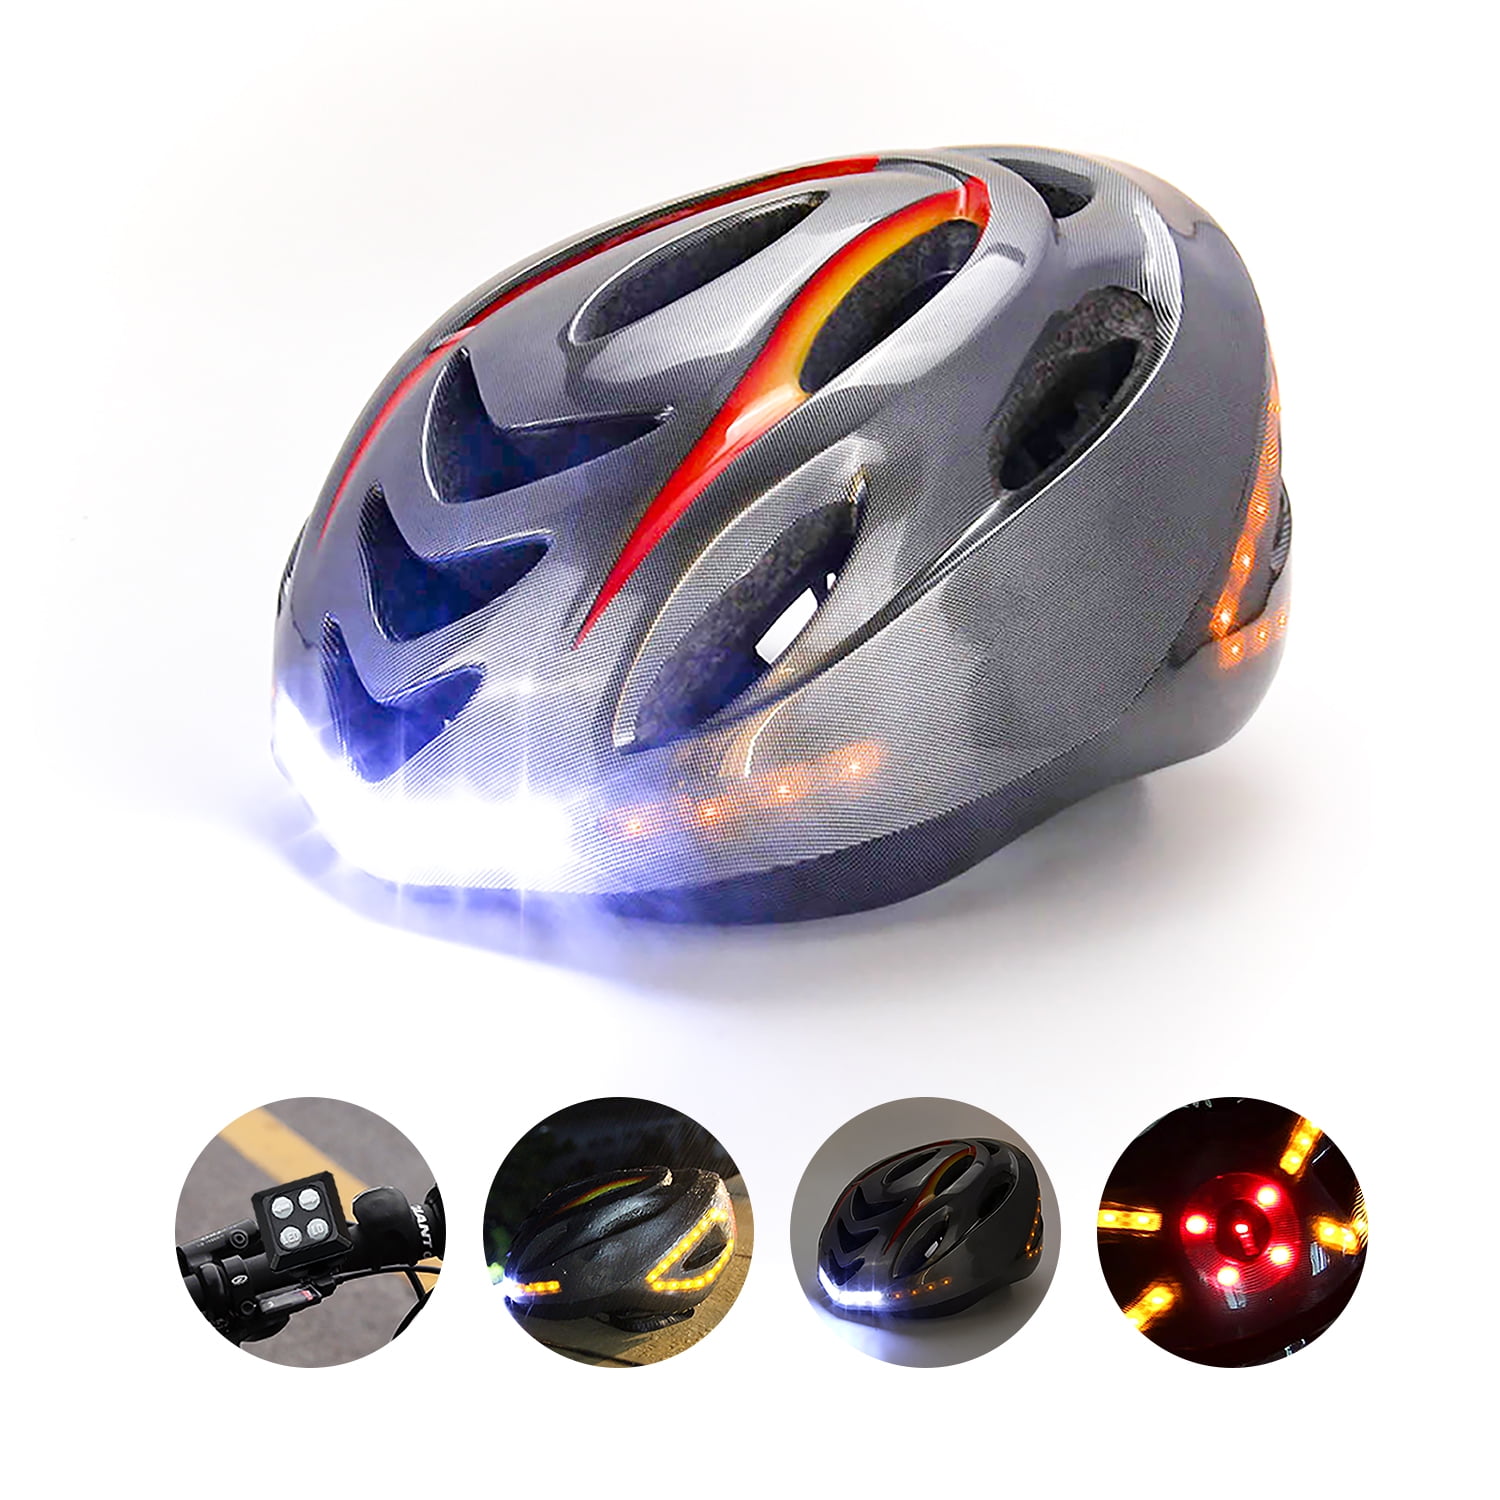 ROCKBROS Cycling Bicycle Bike MTB Helmet With Smart Light USB Recharge 57-62cm 